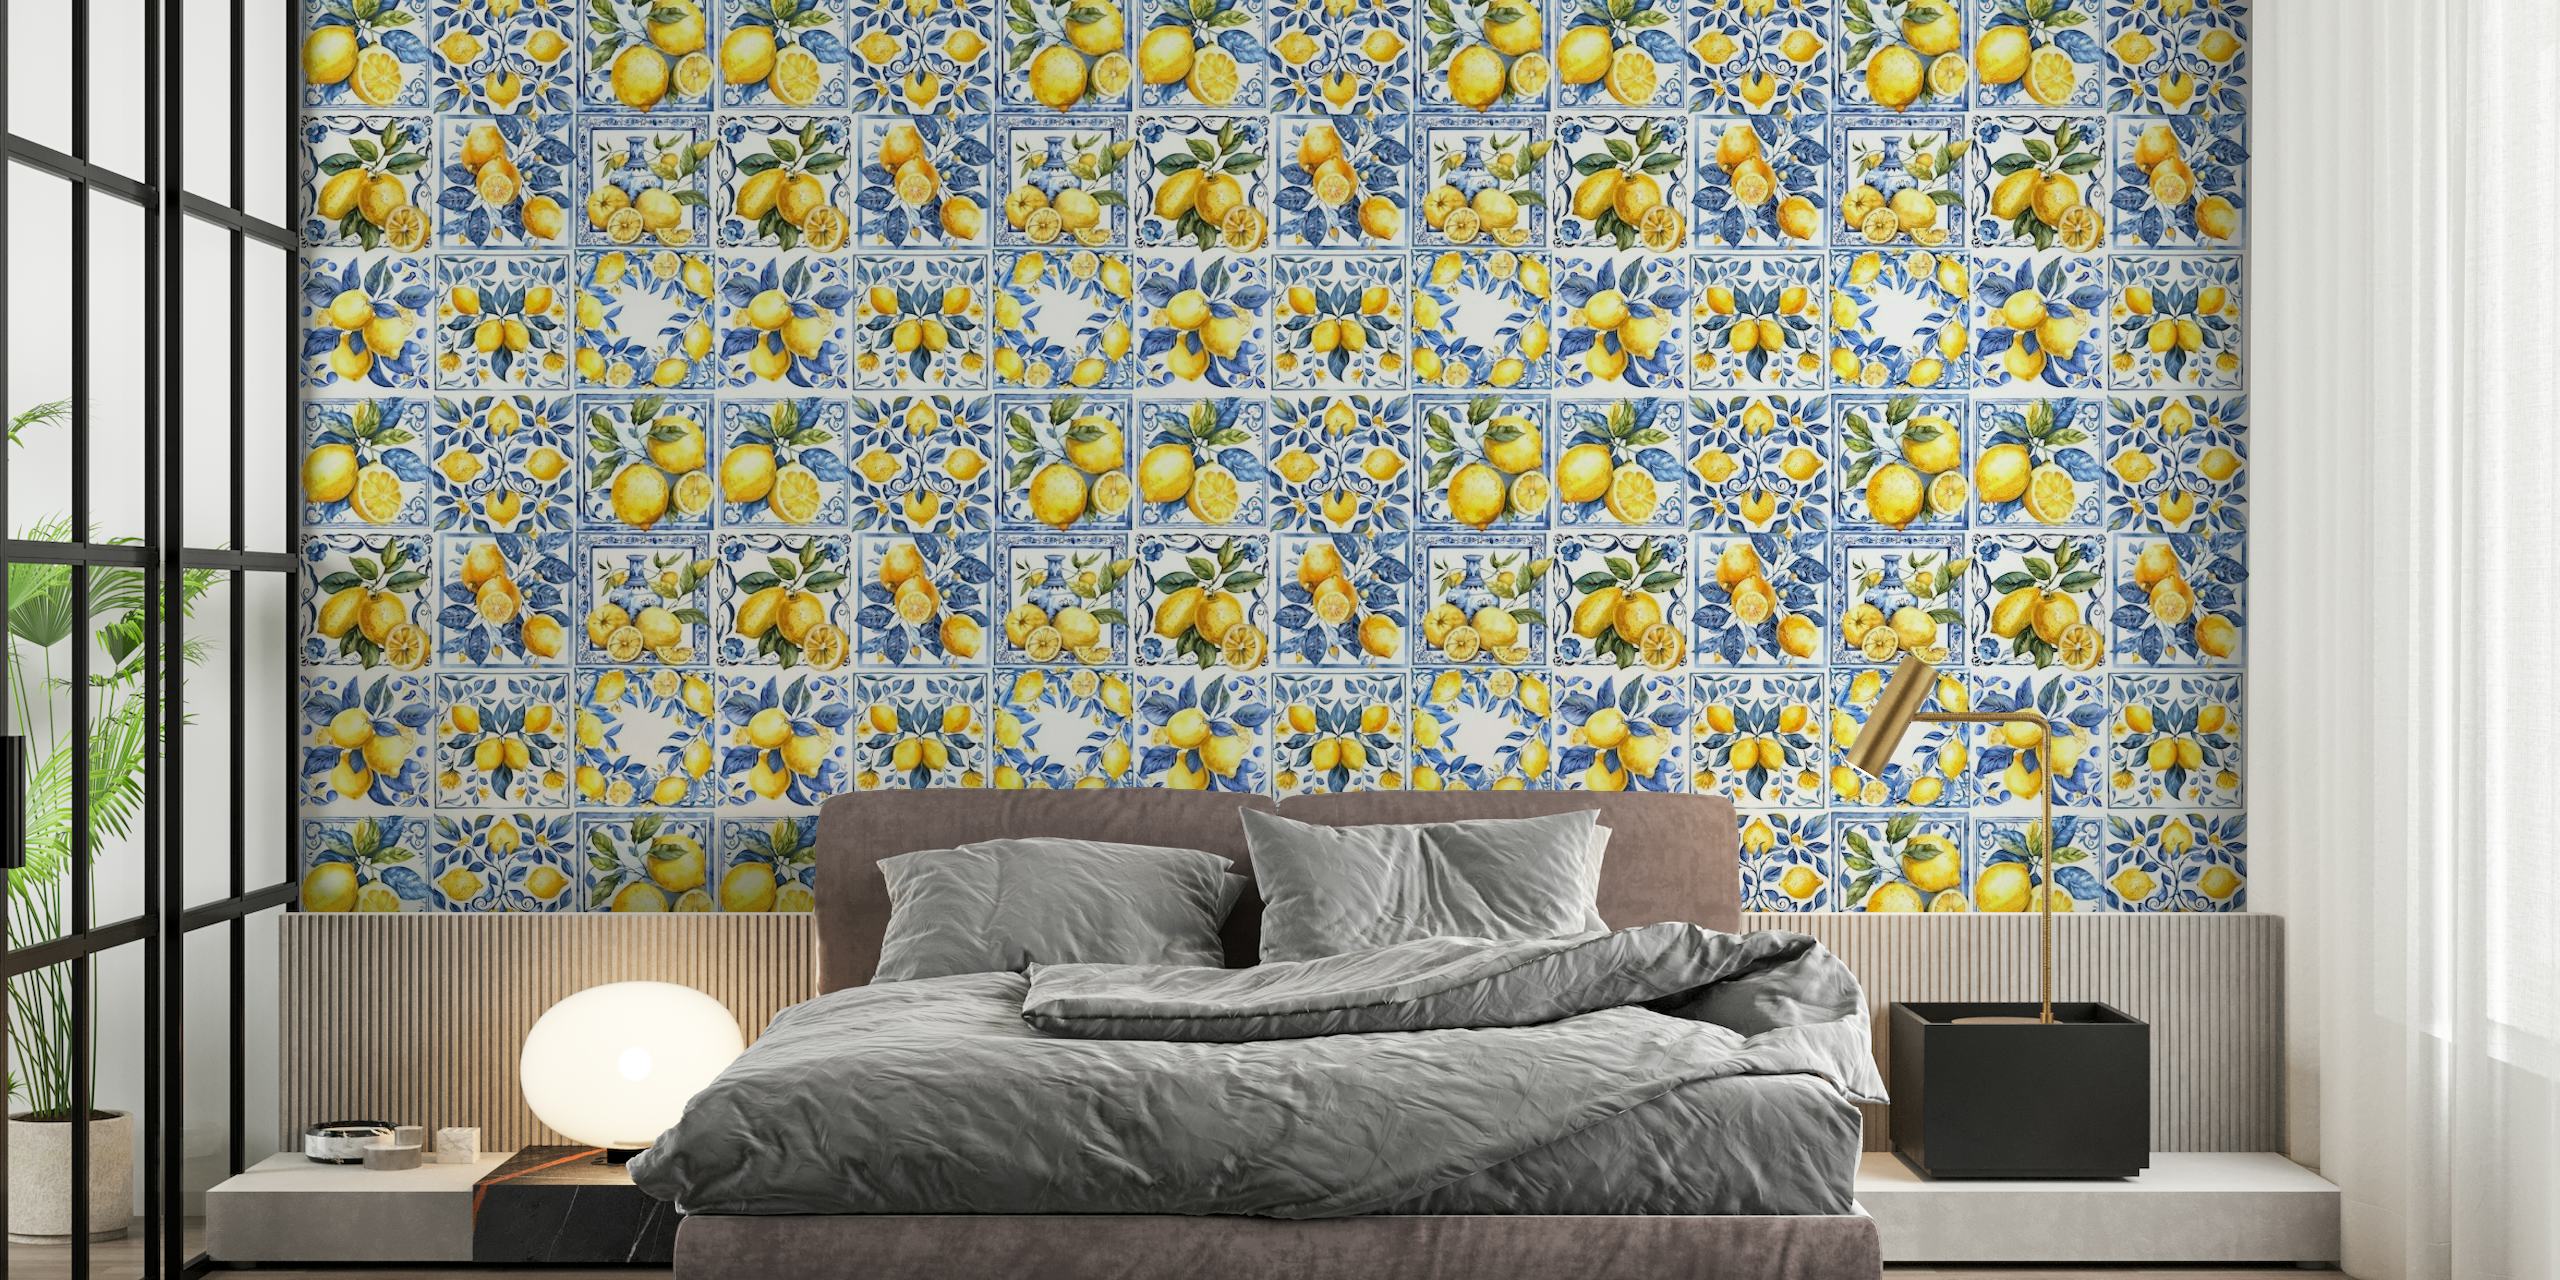 Mediterranean tiles with lemons mural wallpaper